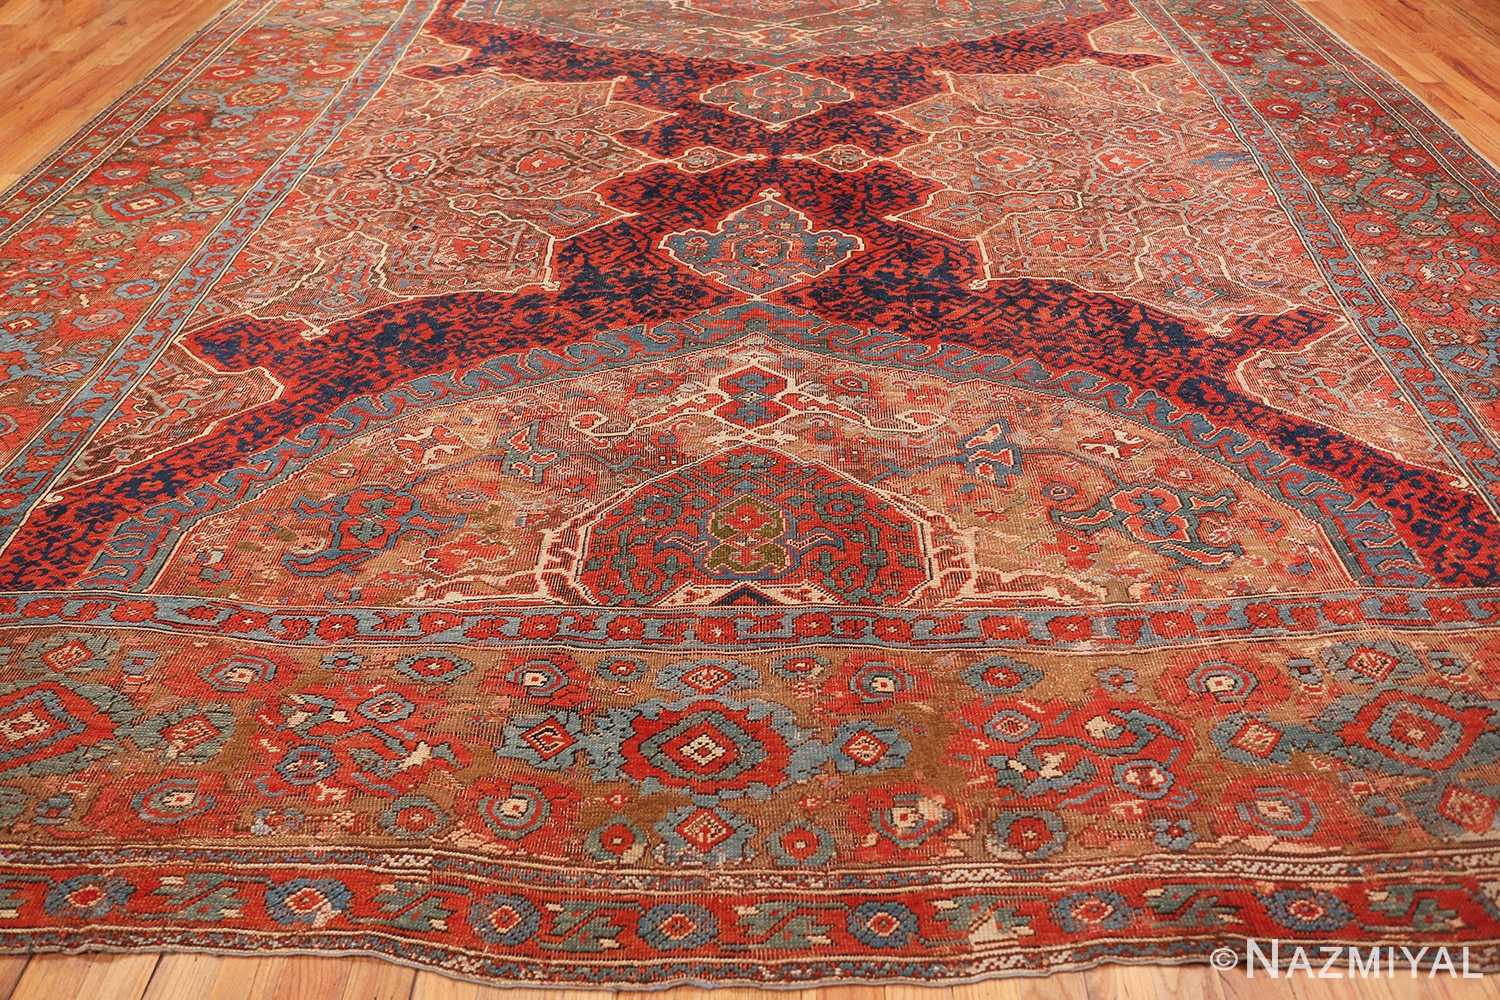 Tribal Oversize Rugs Turkish Rug Vintage Rug Large Carpet 8372 61x122 inches Red Carpet Handwoven Salon Carpet Oushak Carpet